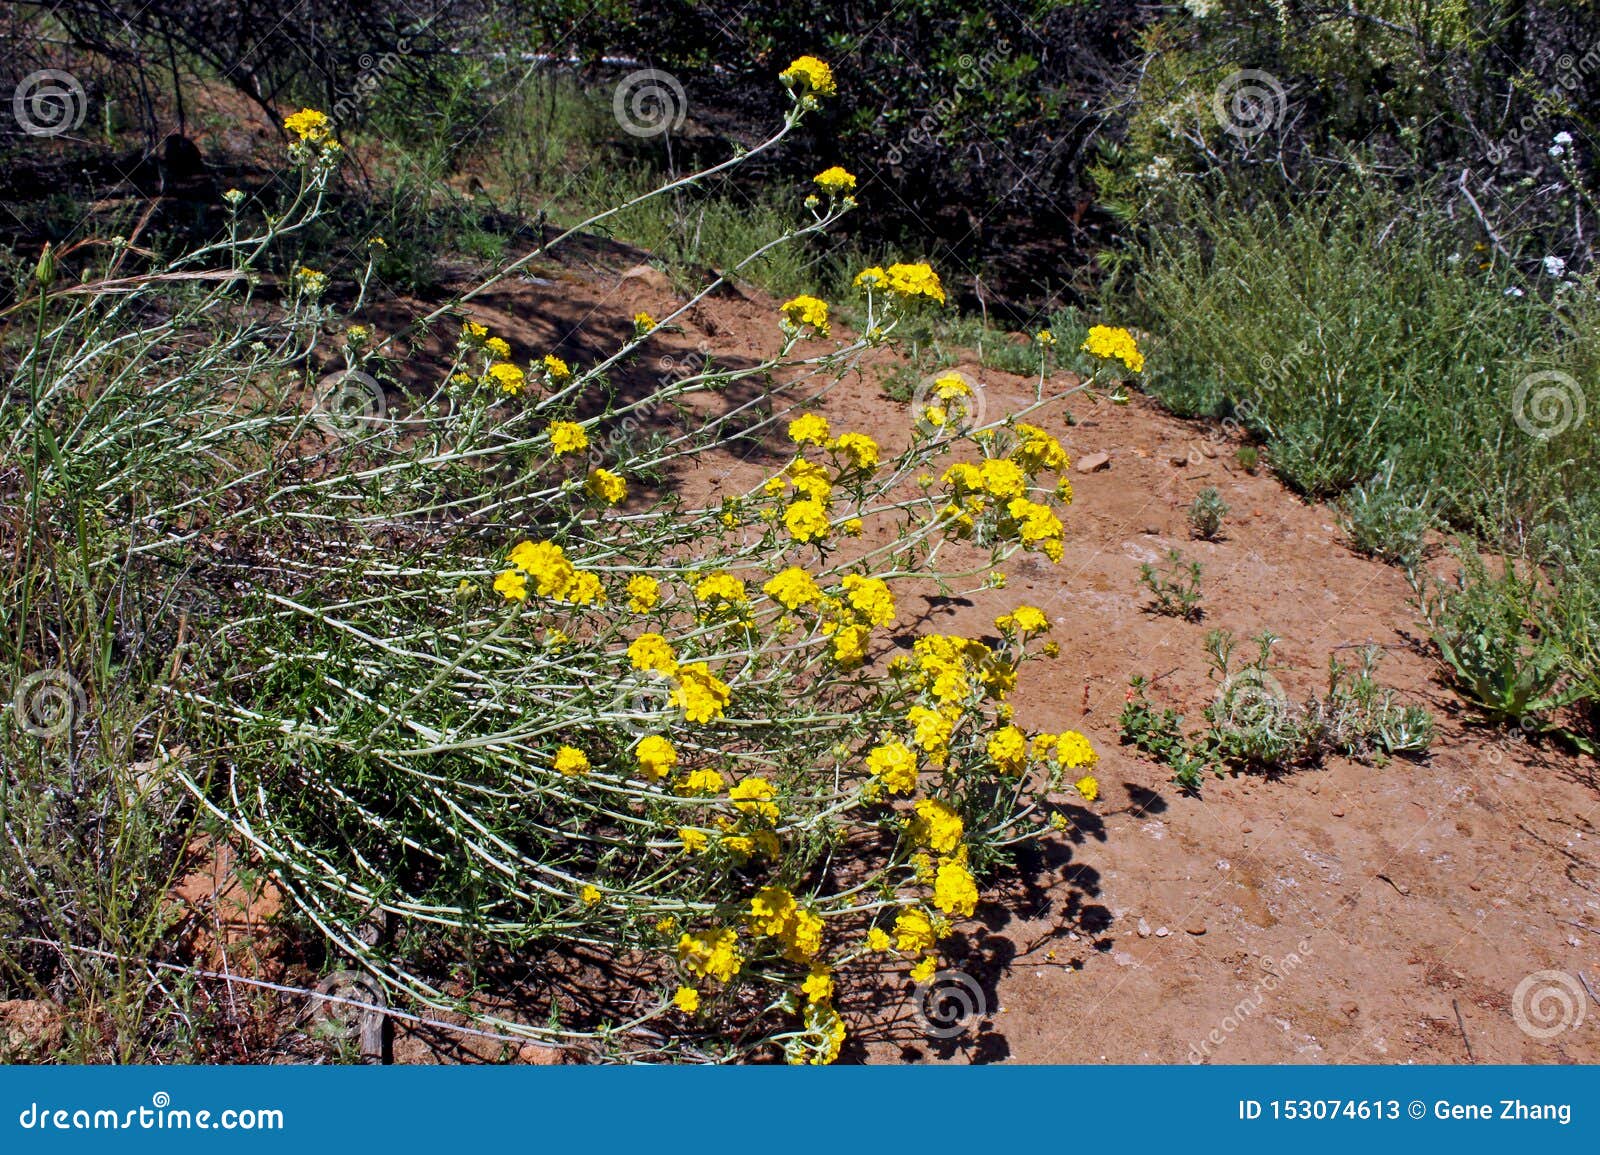 golden yarrow, yellow yarrow flowers